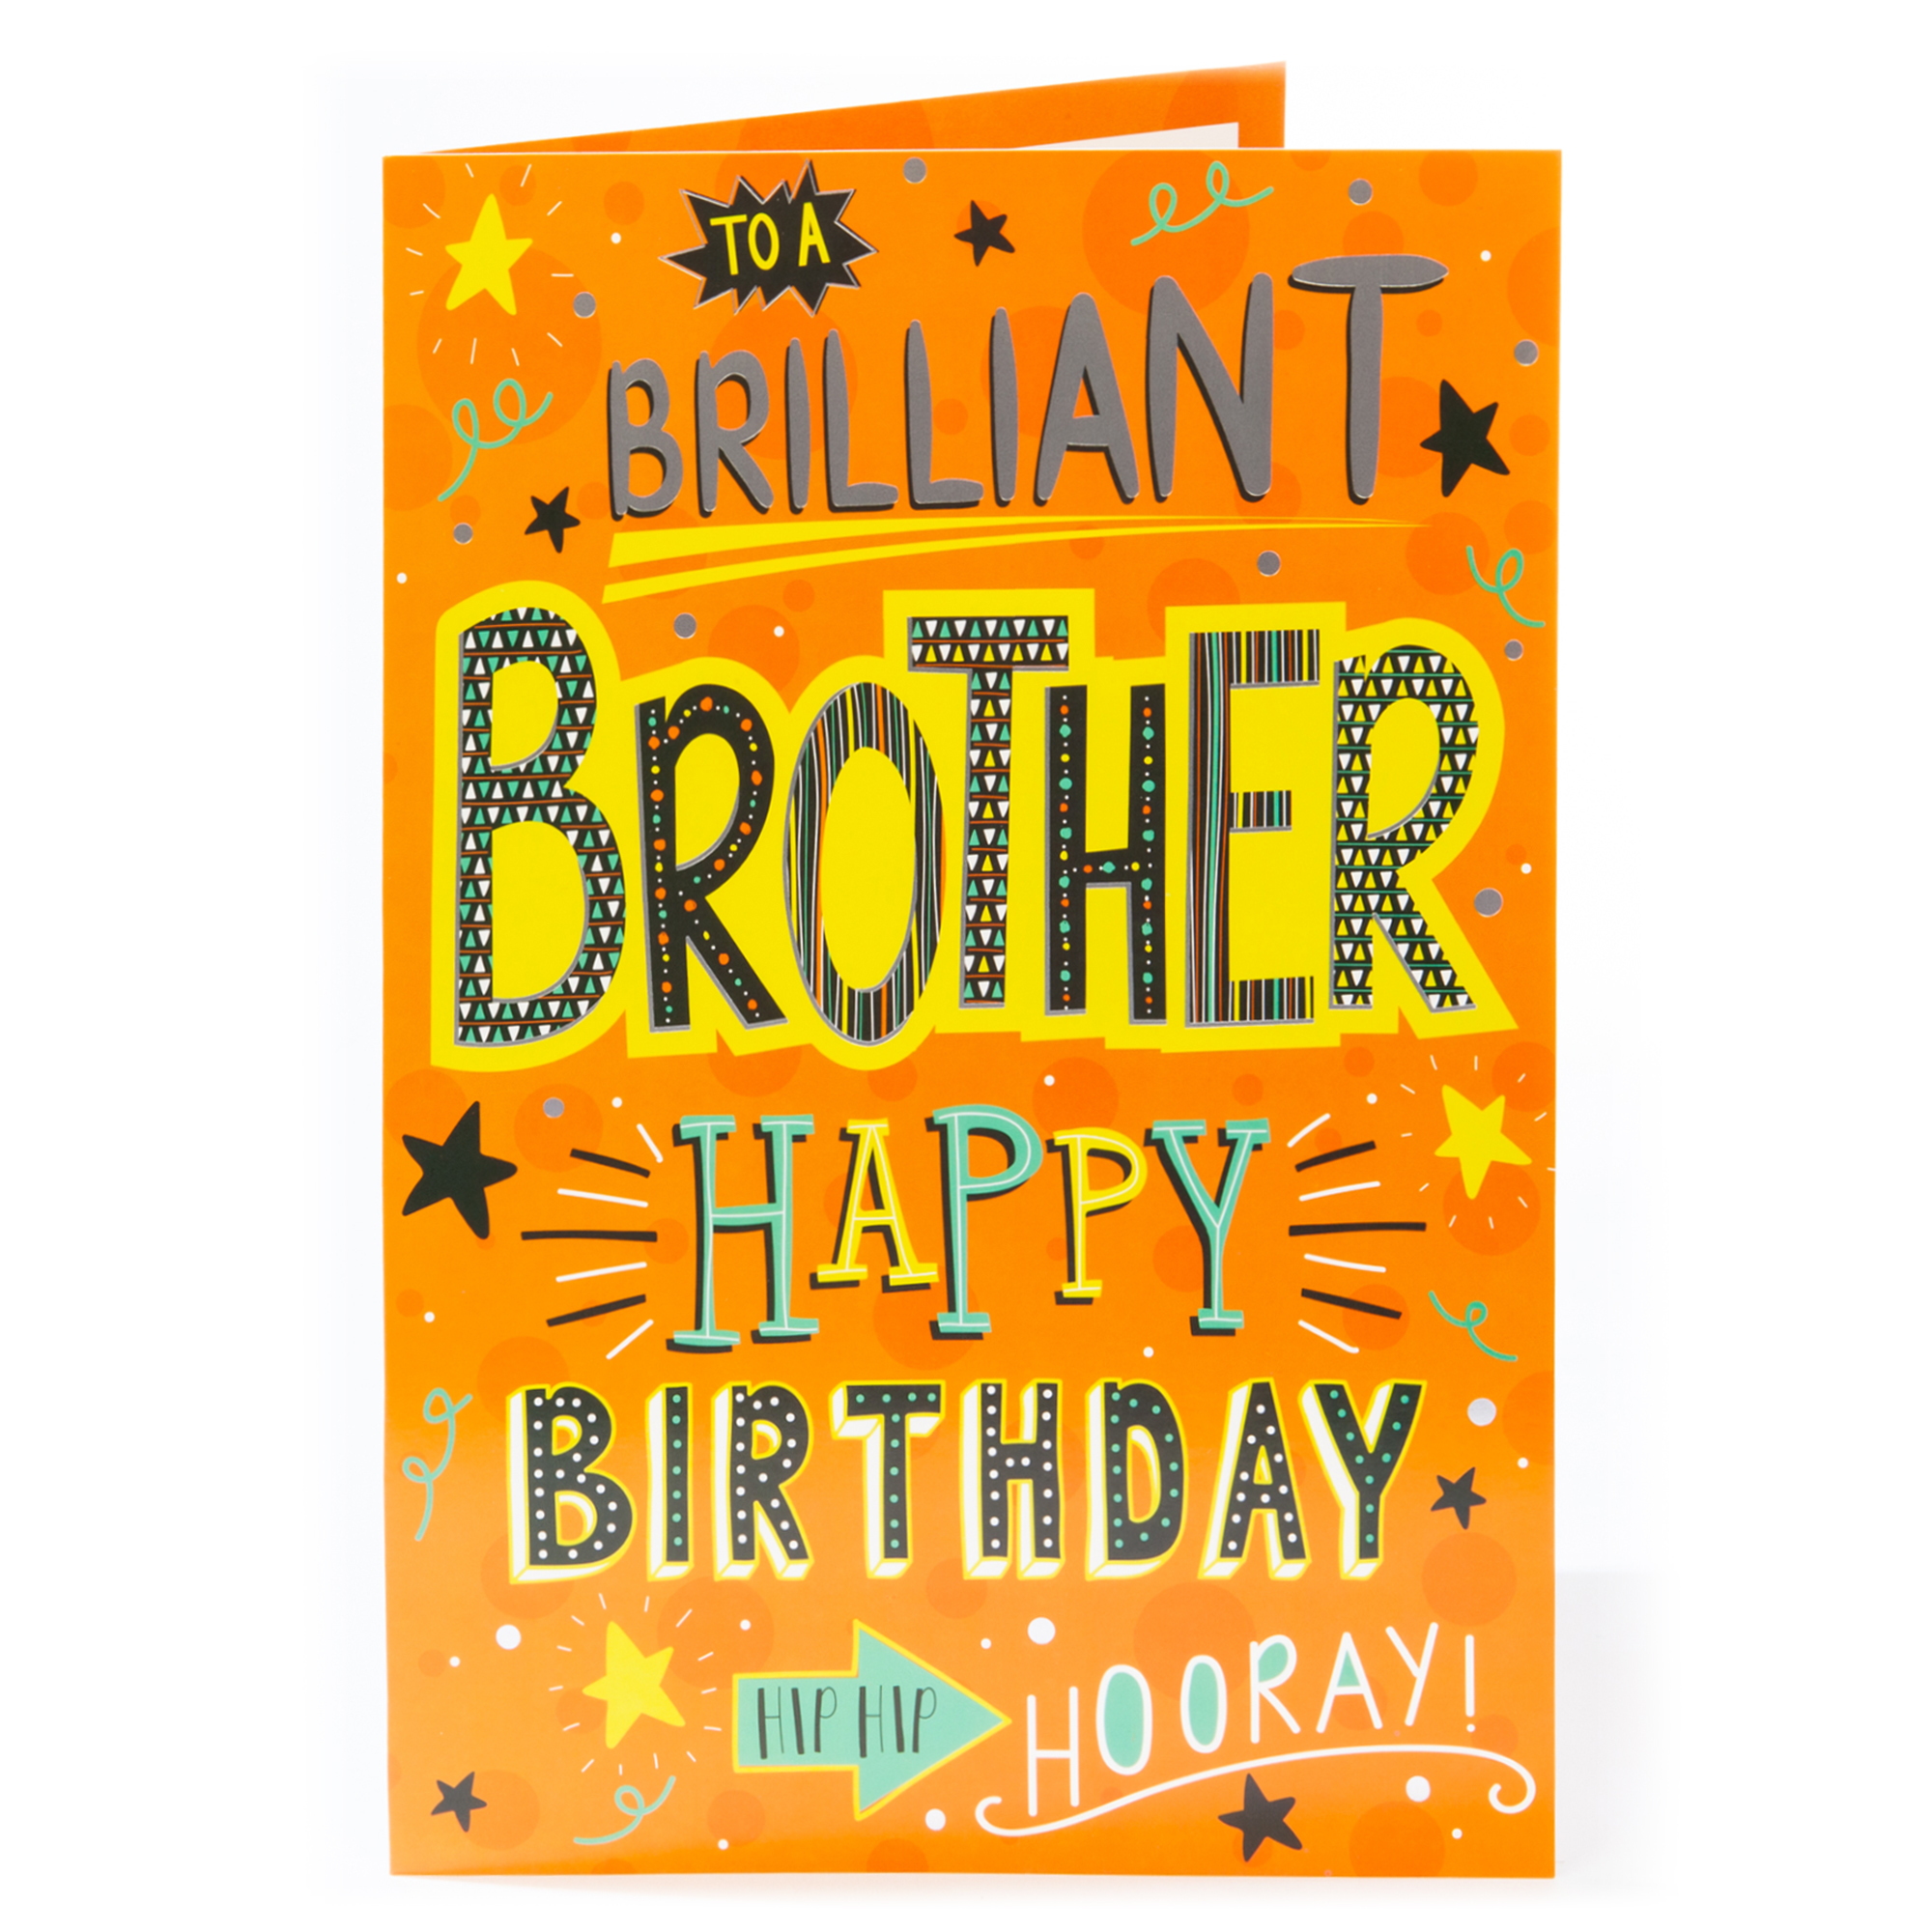 Giant Birthday Card - Brilliant Brother